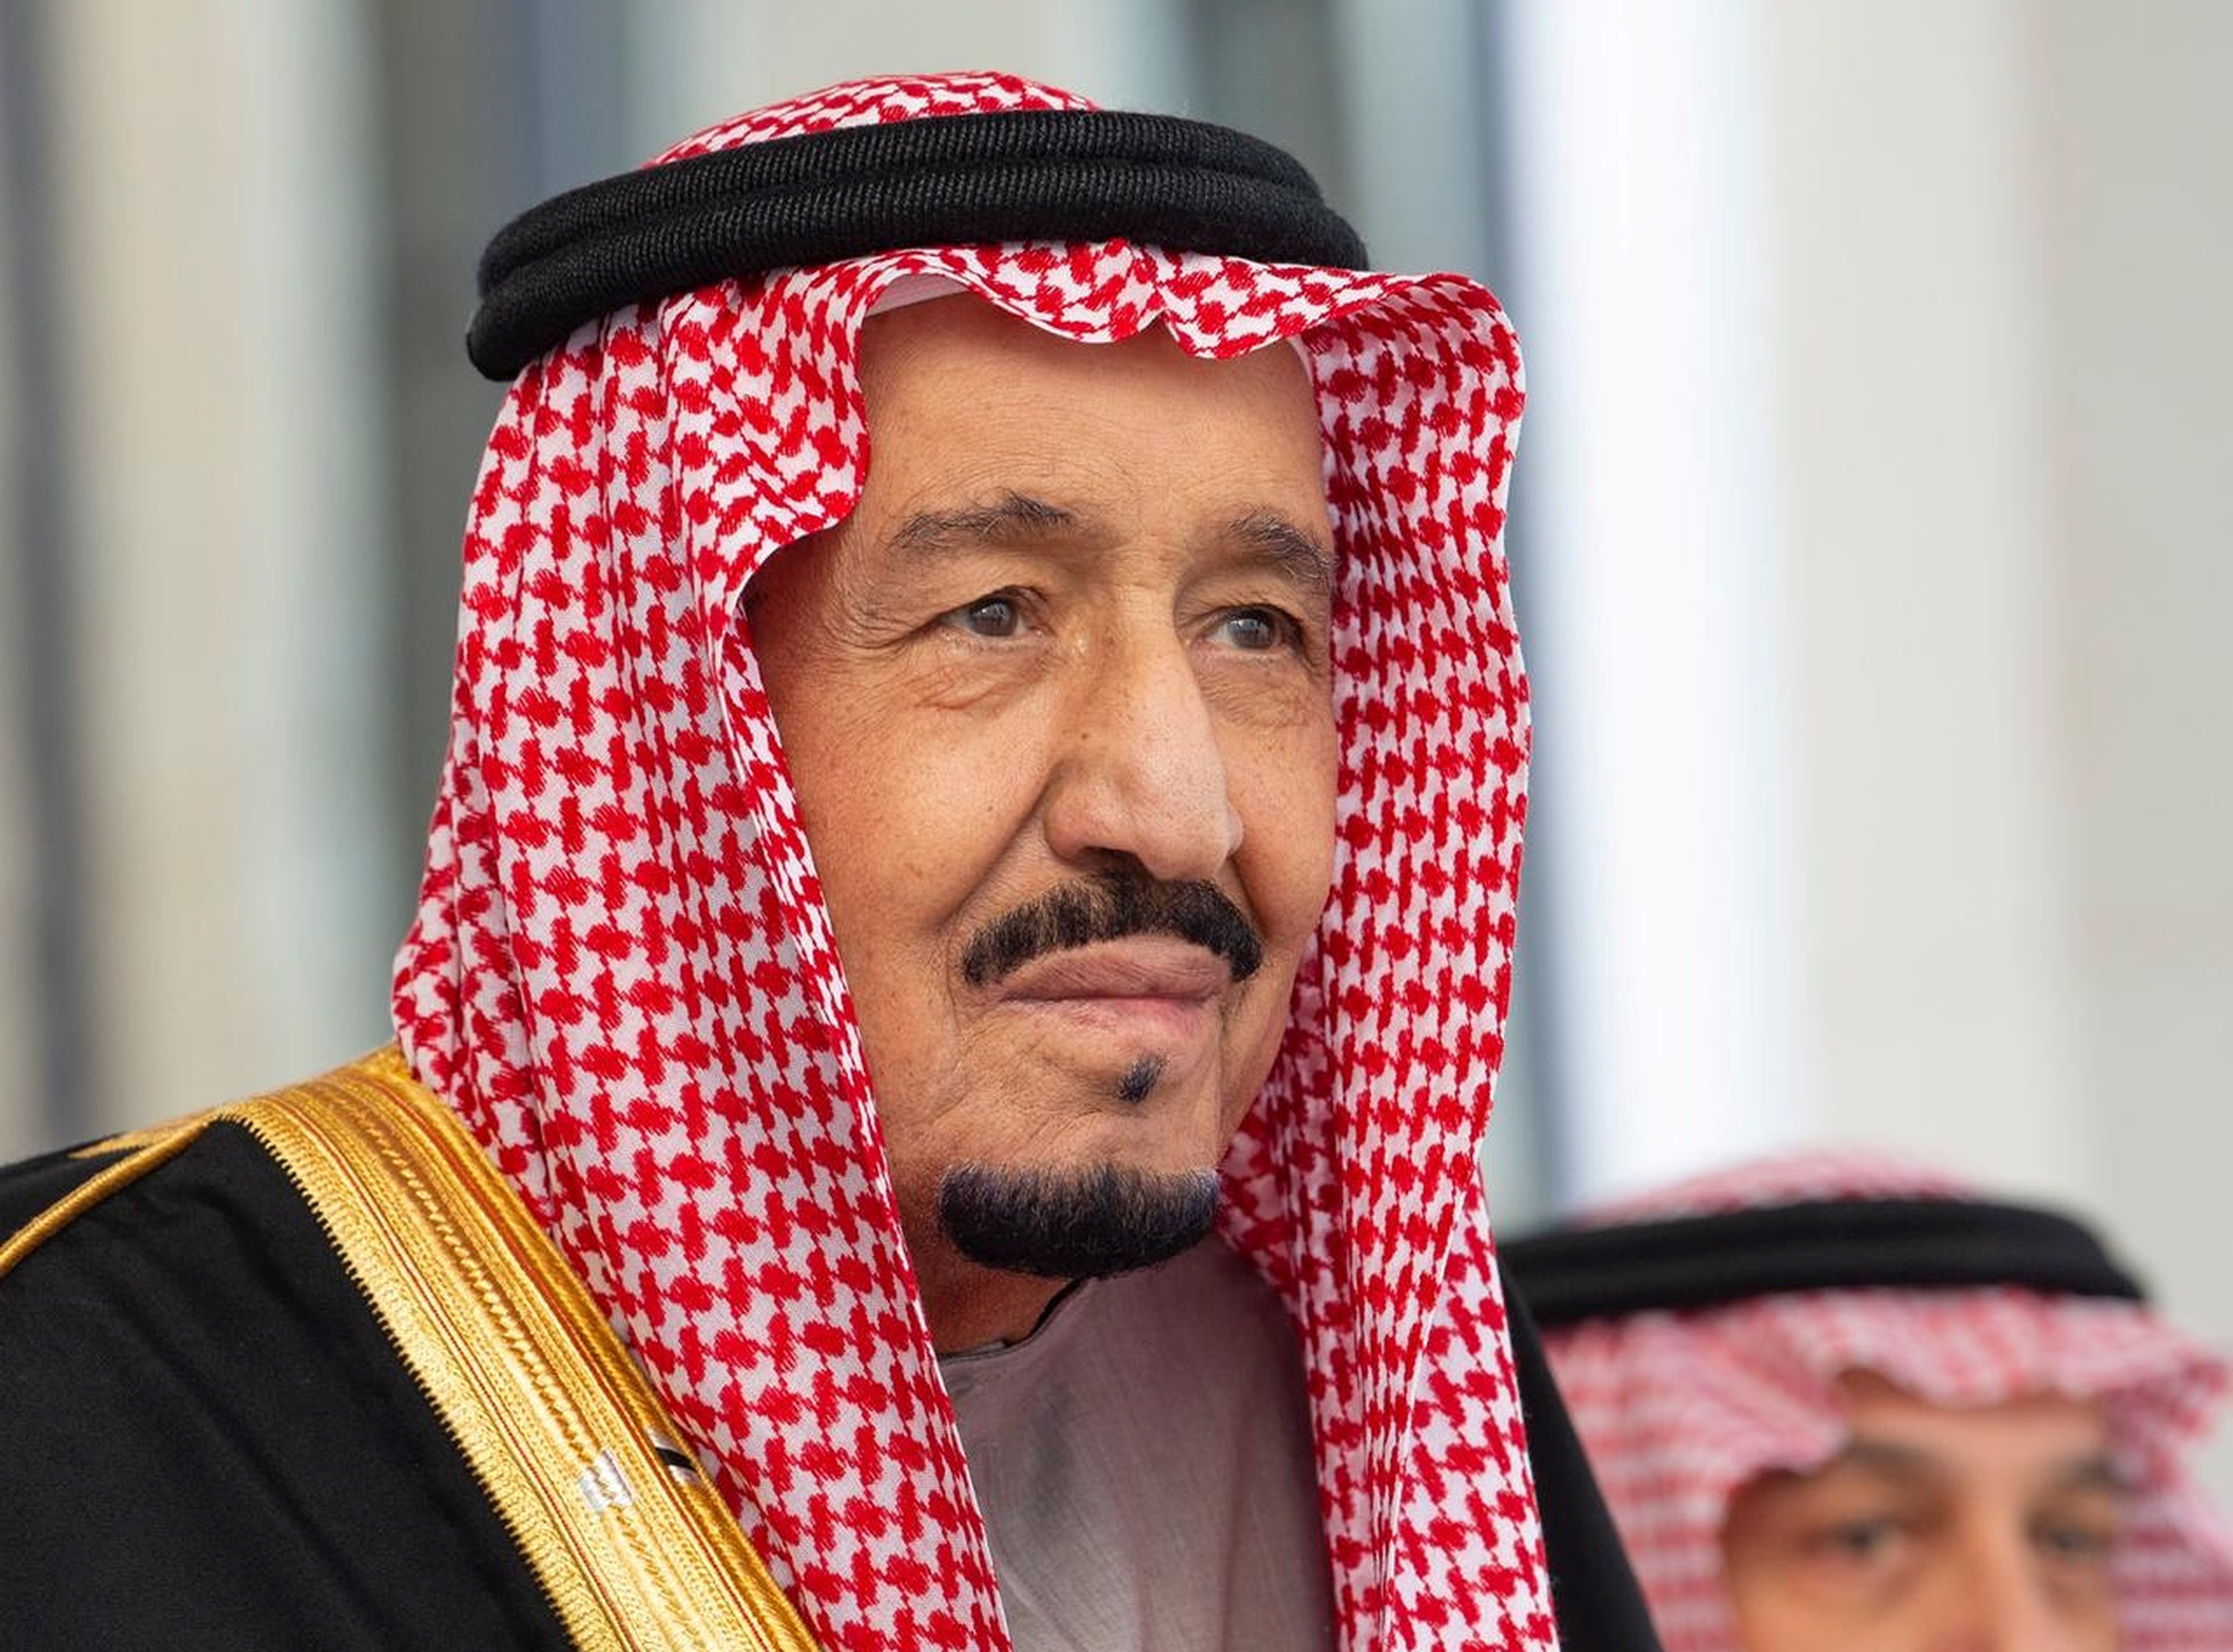 El rey de Arabia Saudí, Salman bin Abdulaziz al Saud